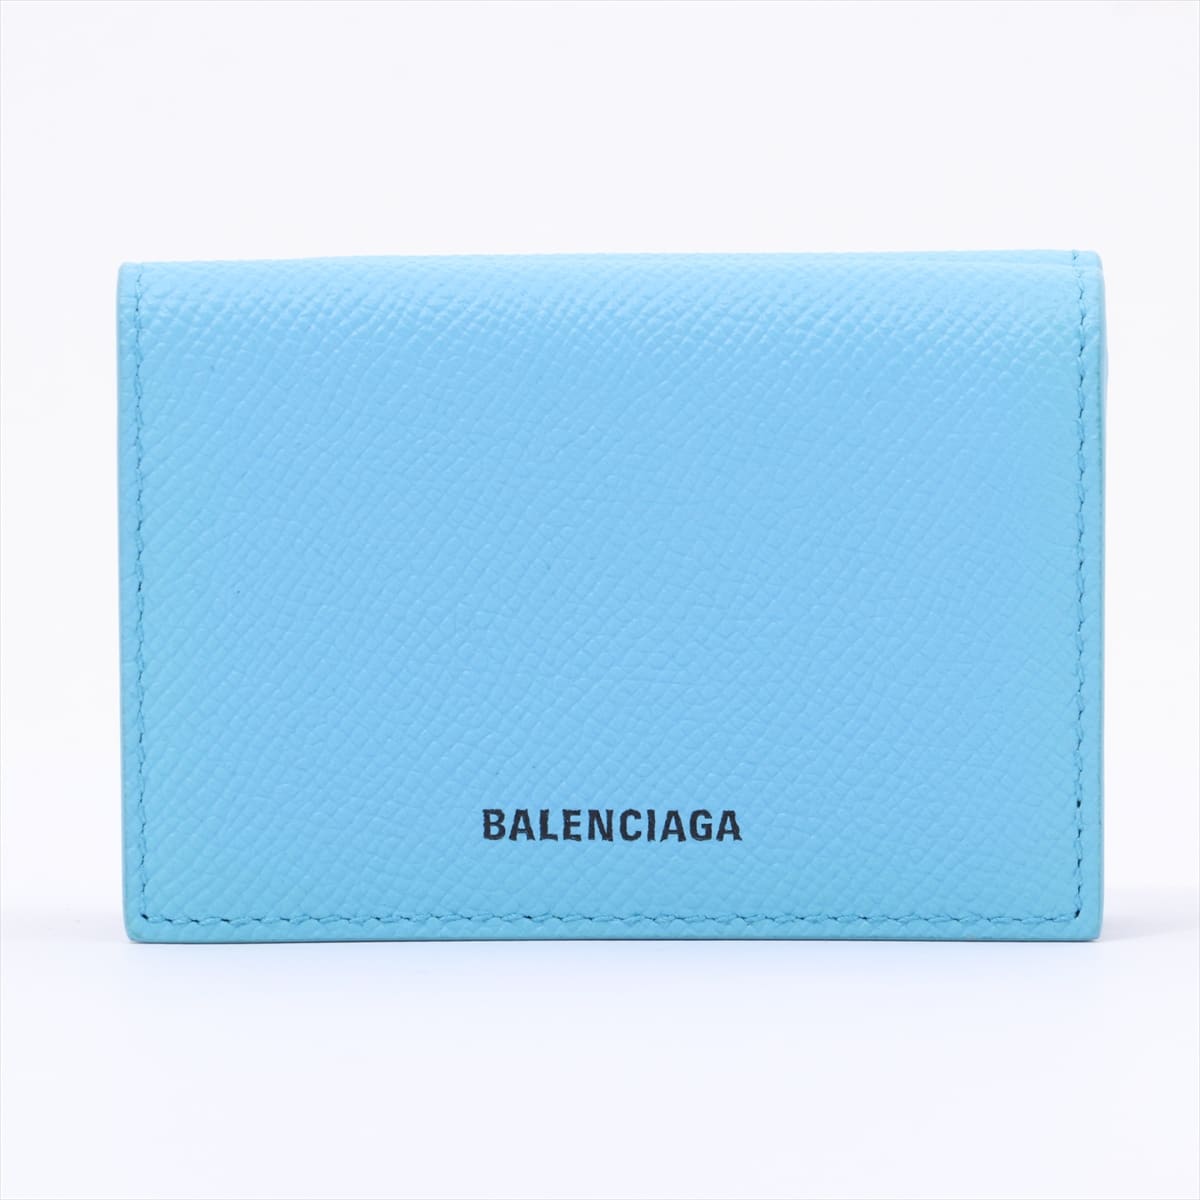 Balenciaga Ville 558208 Leather Wallet Blue threefold